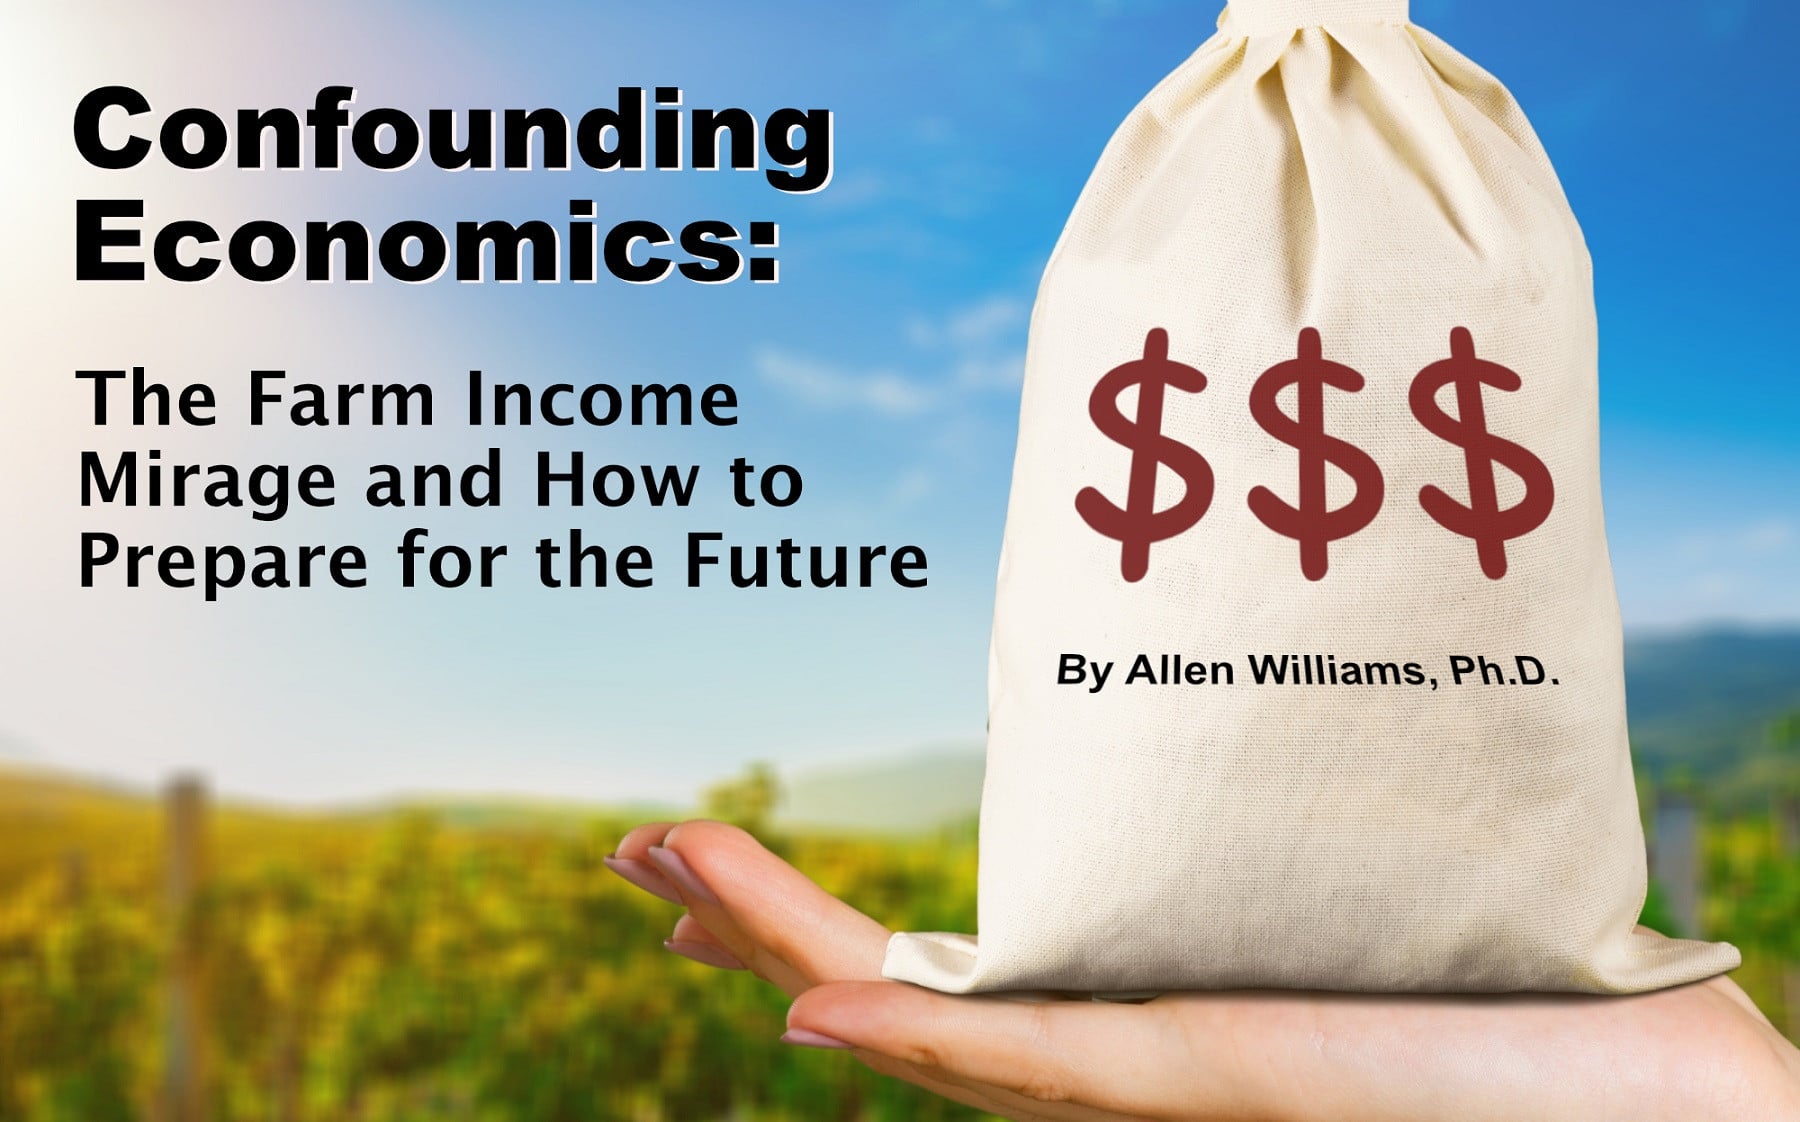 Confounding Economics: The Farm Income Mirage and How to Prepare for the Future